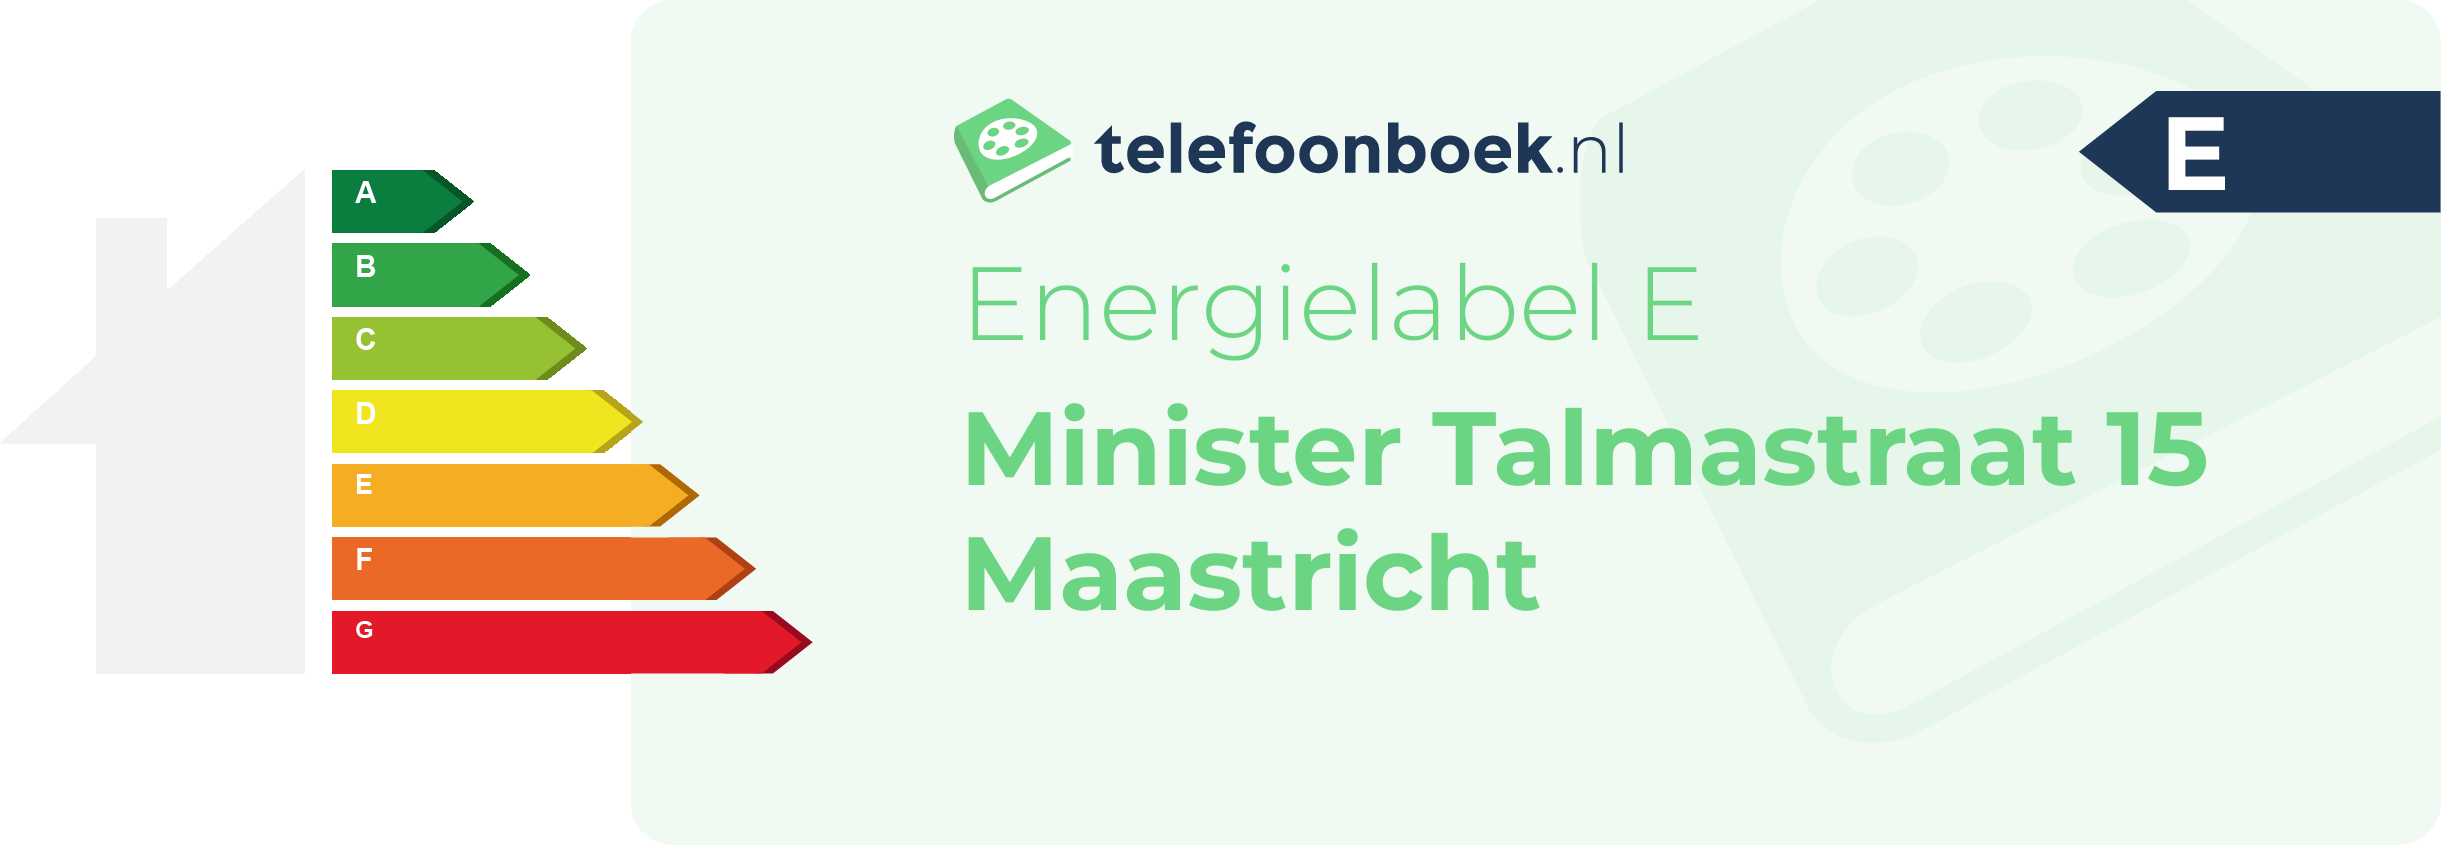 Energielabel Minister Talmastraat 15 Maastricht